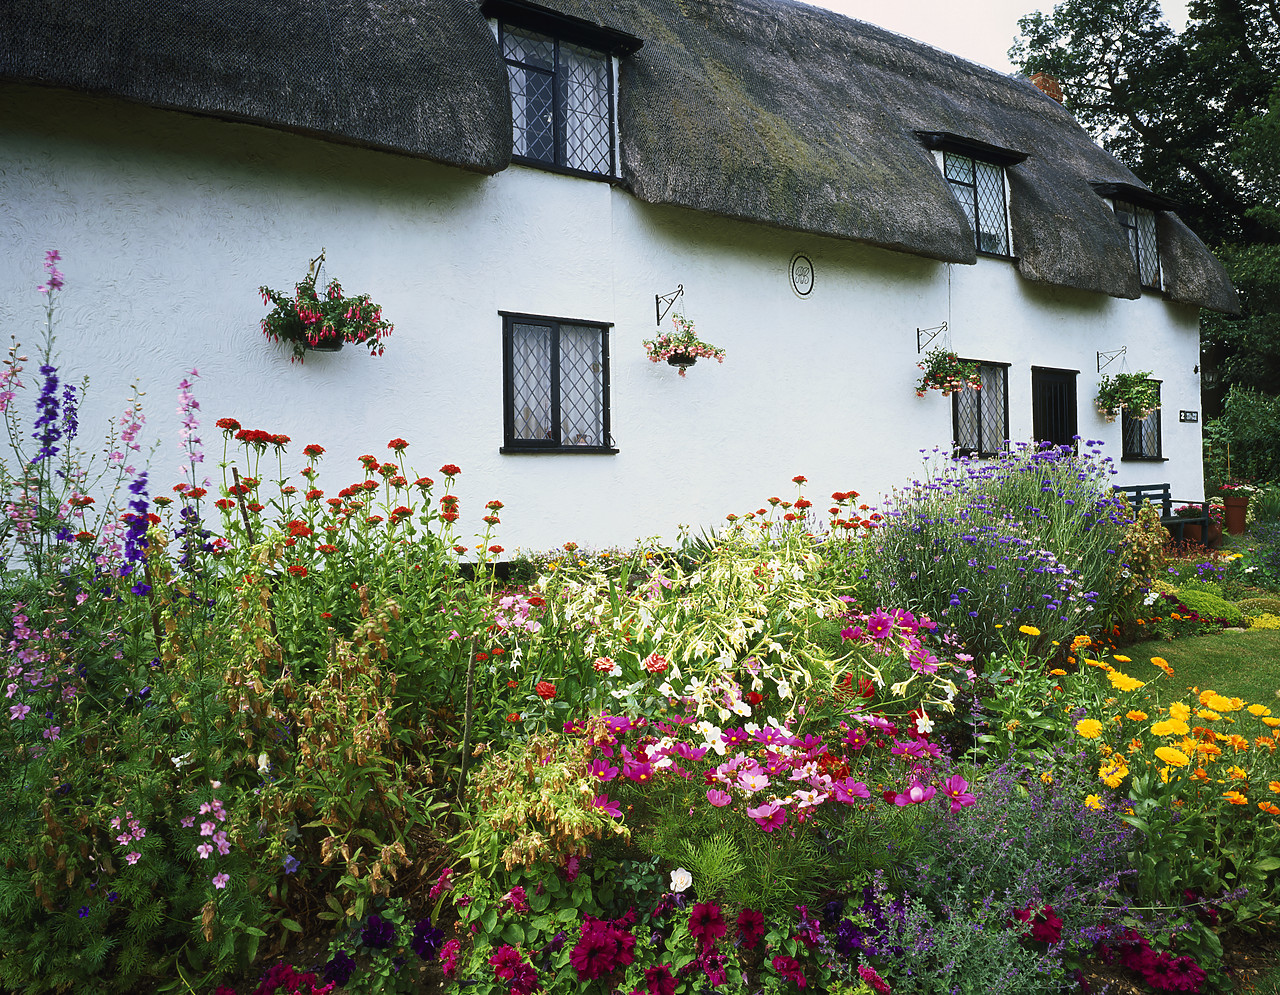 #040152-2 - Thatched Cottage & Garden, Finchingfield, Essex, England